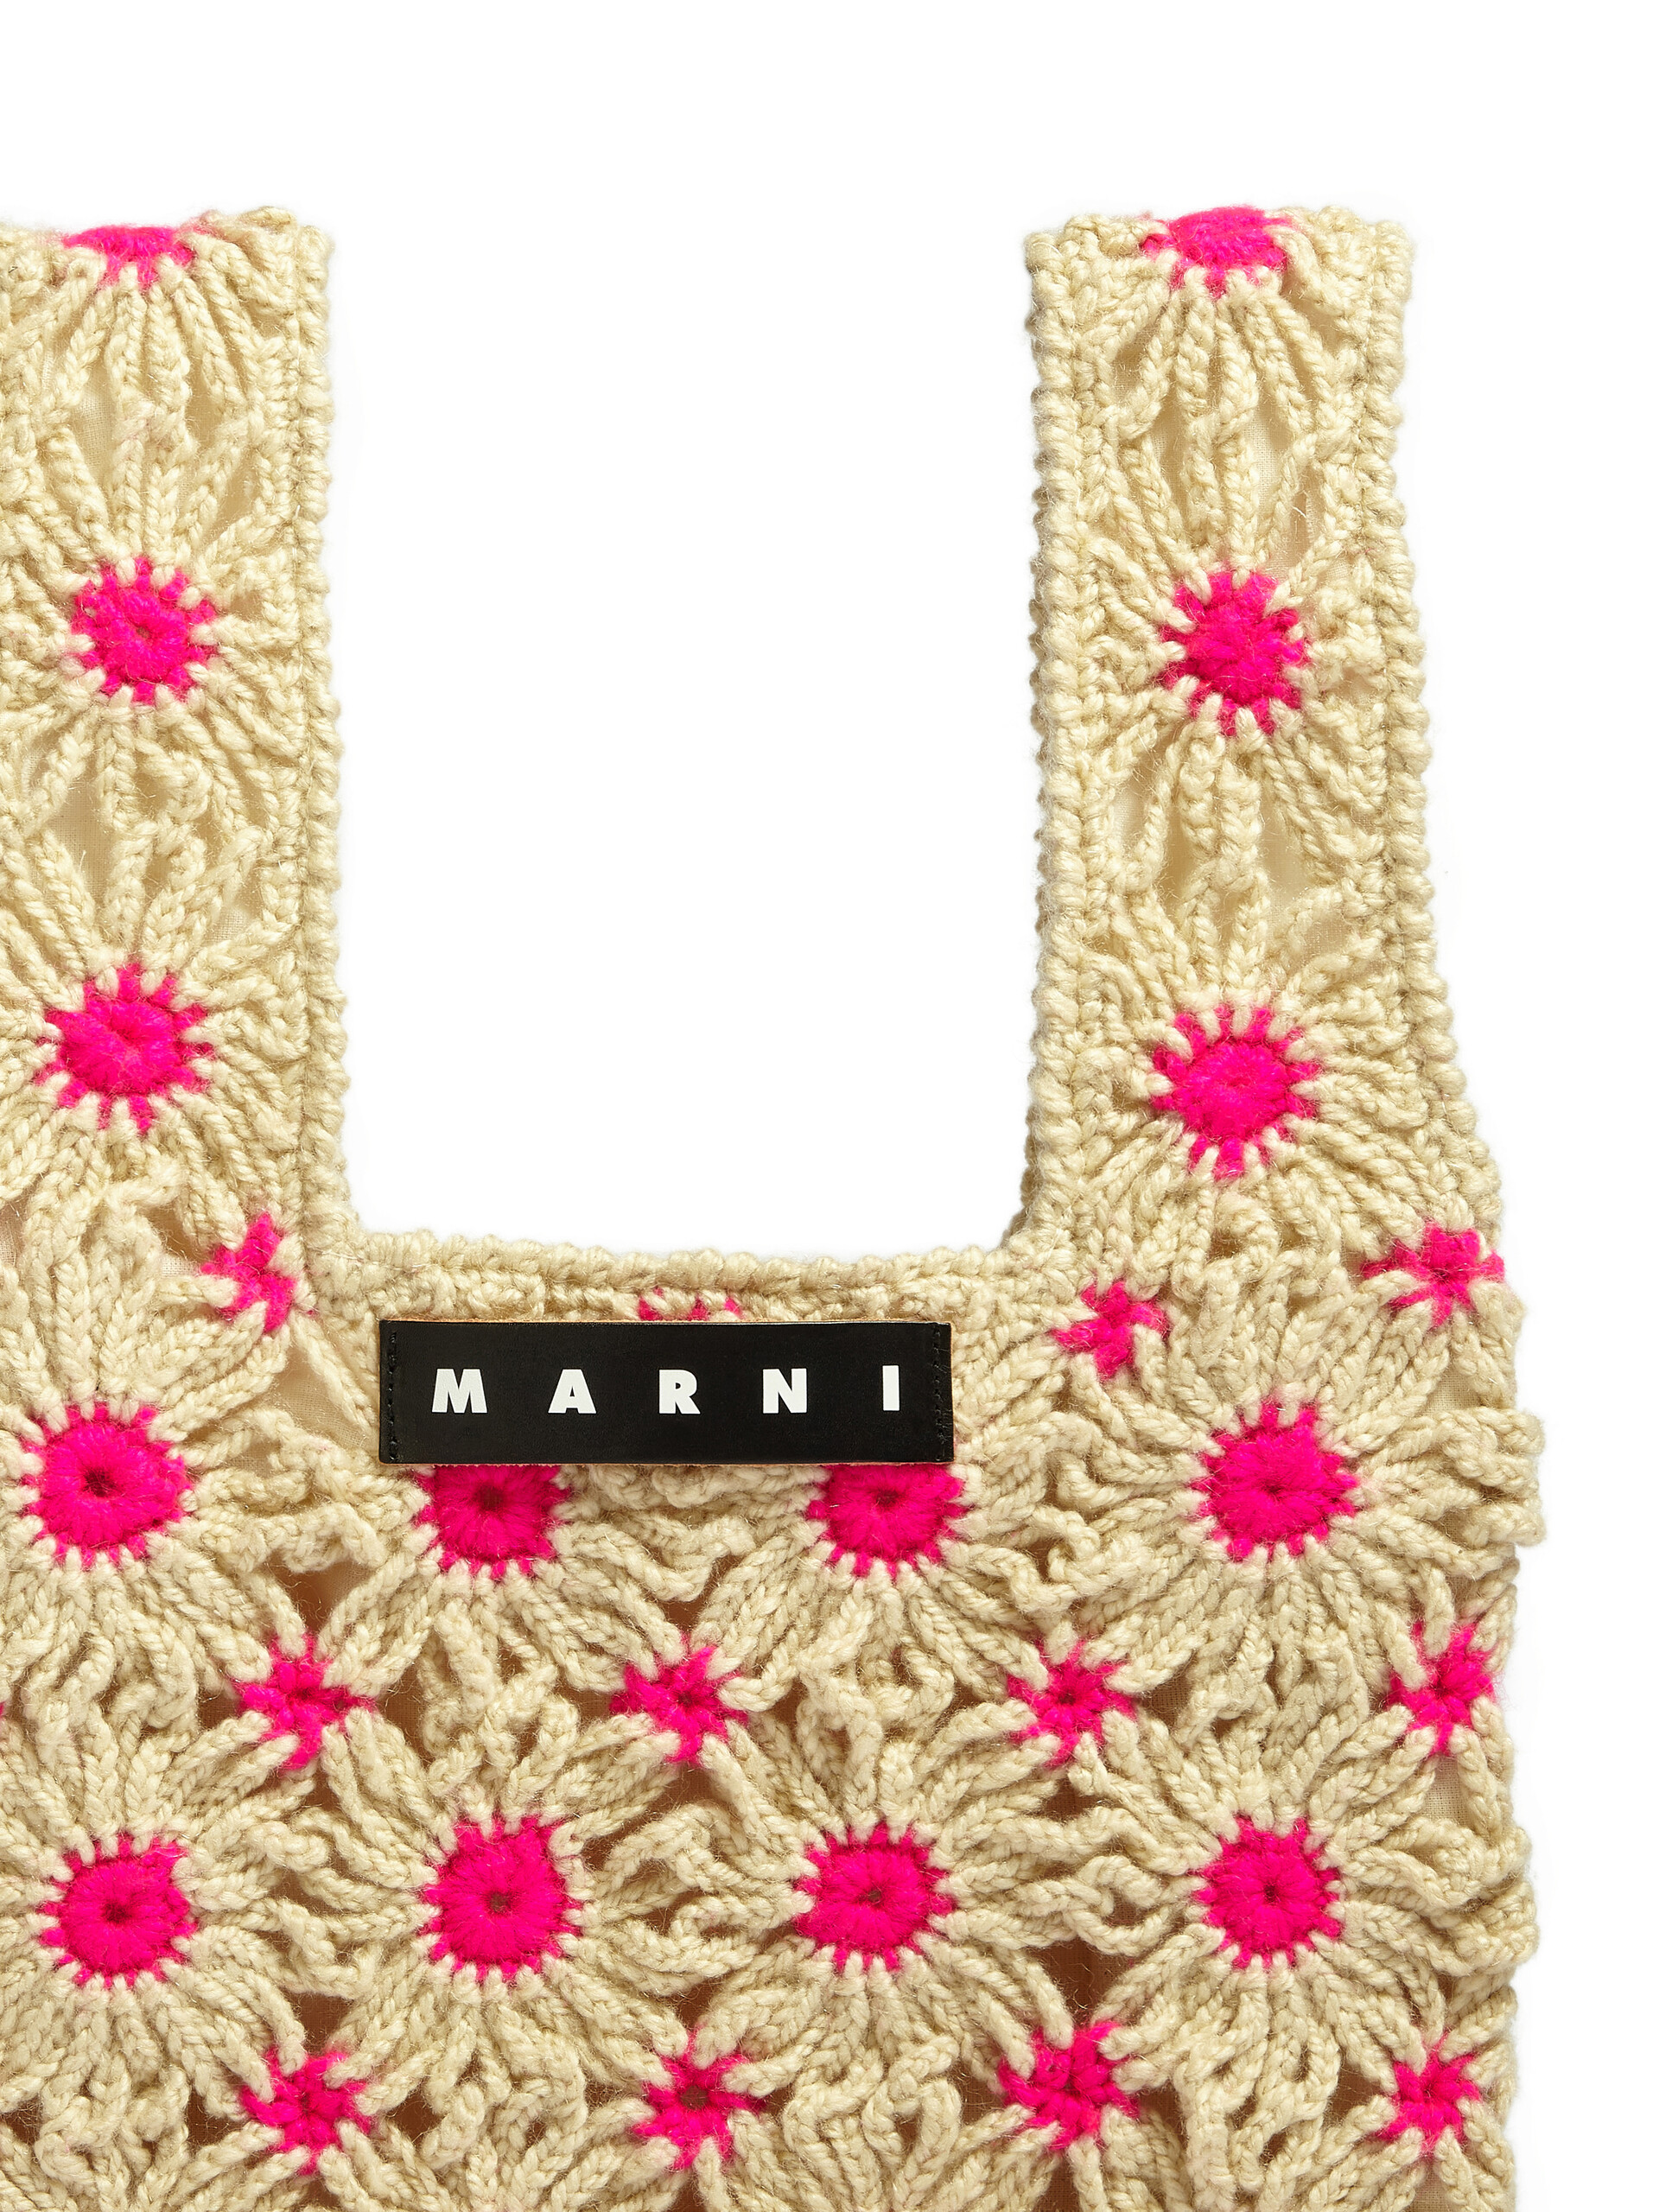 MARNI MARKET FISH bag in pink crochet - Bags - Image 4